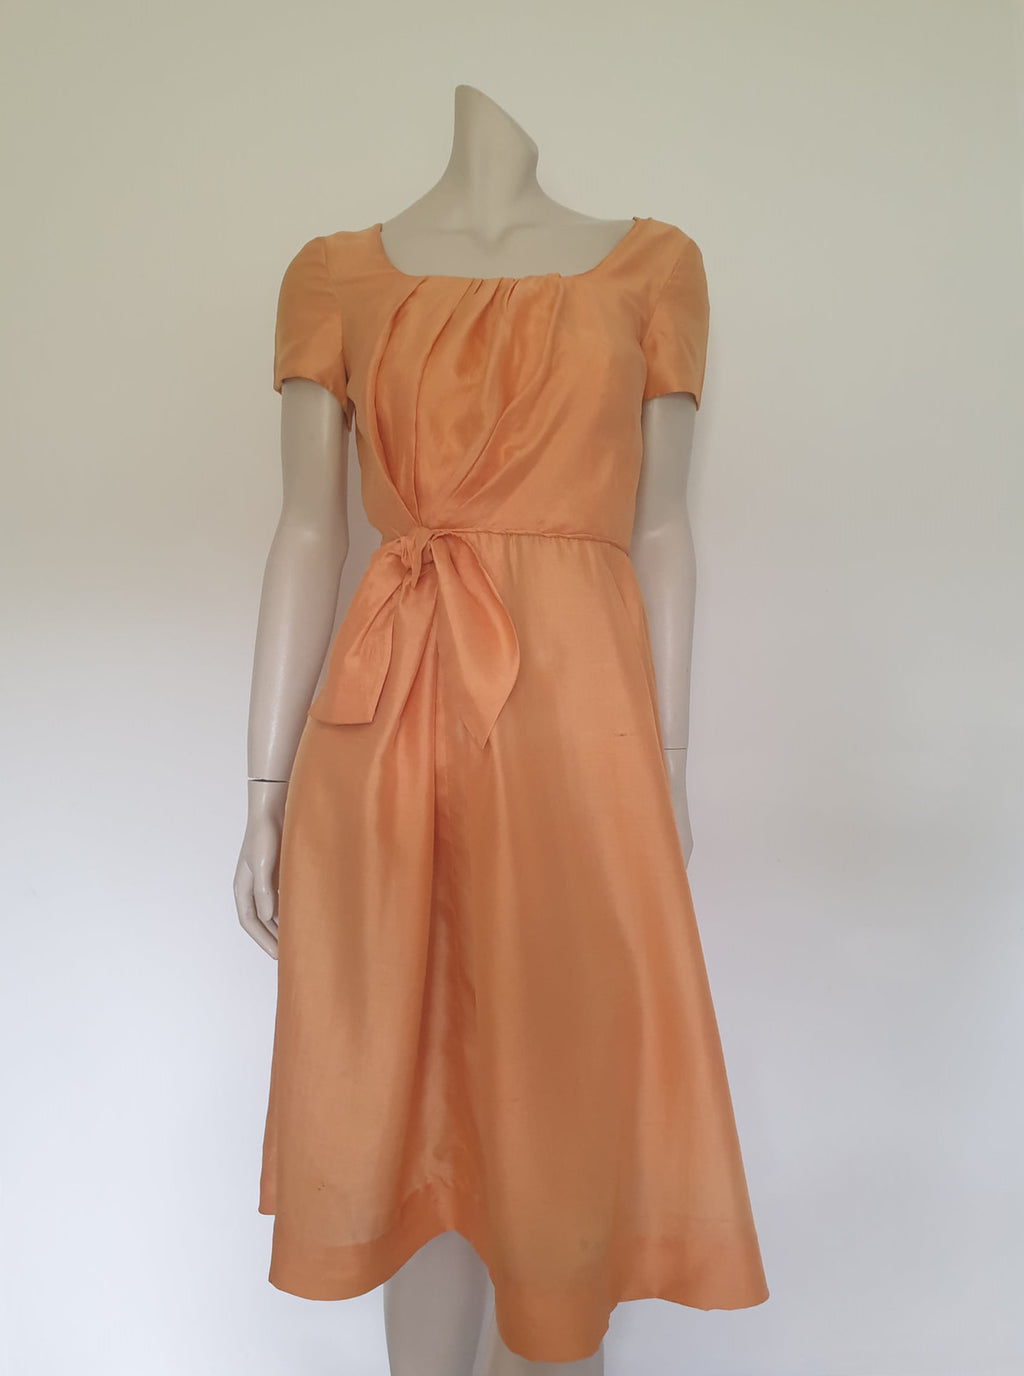 1950s vintage peach dress small